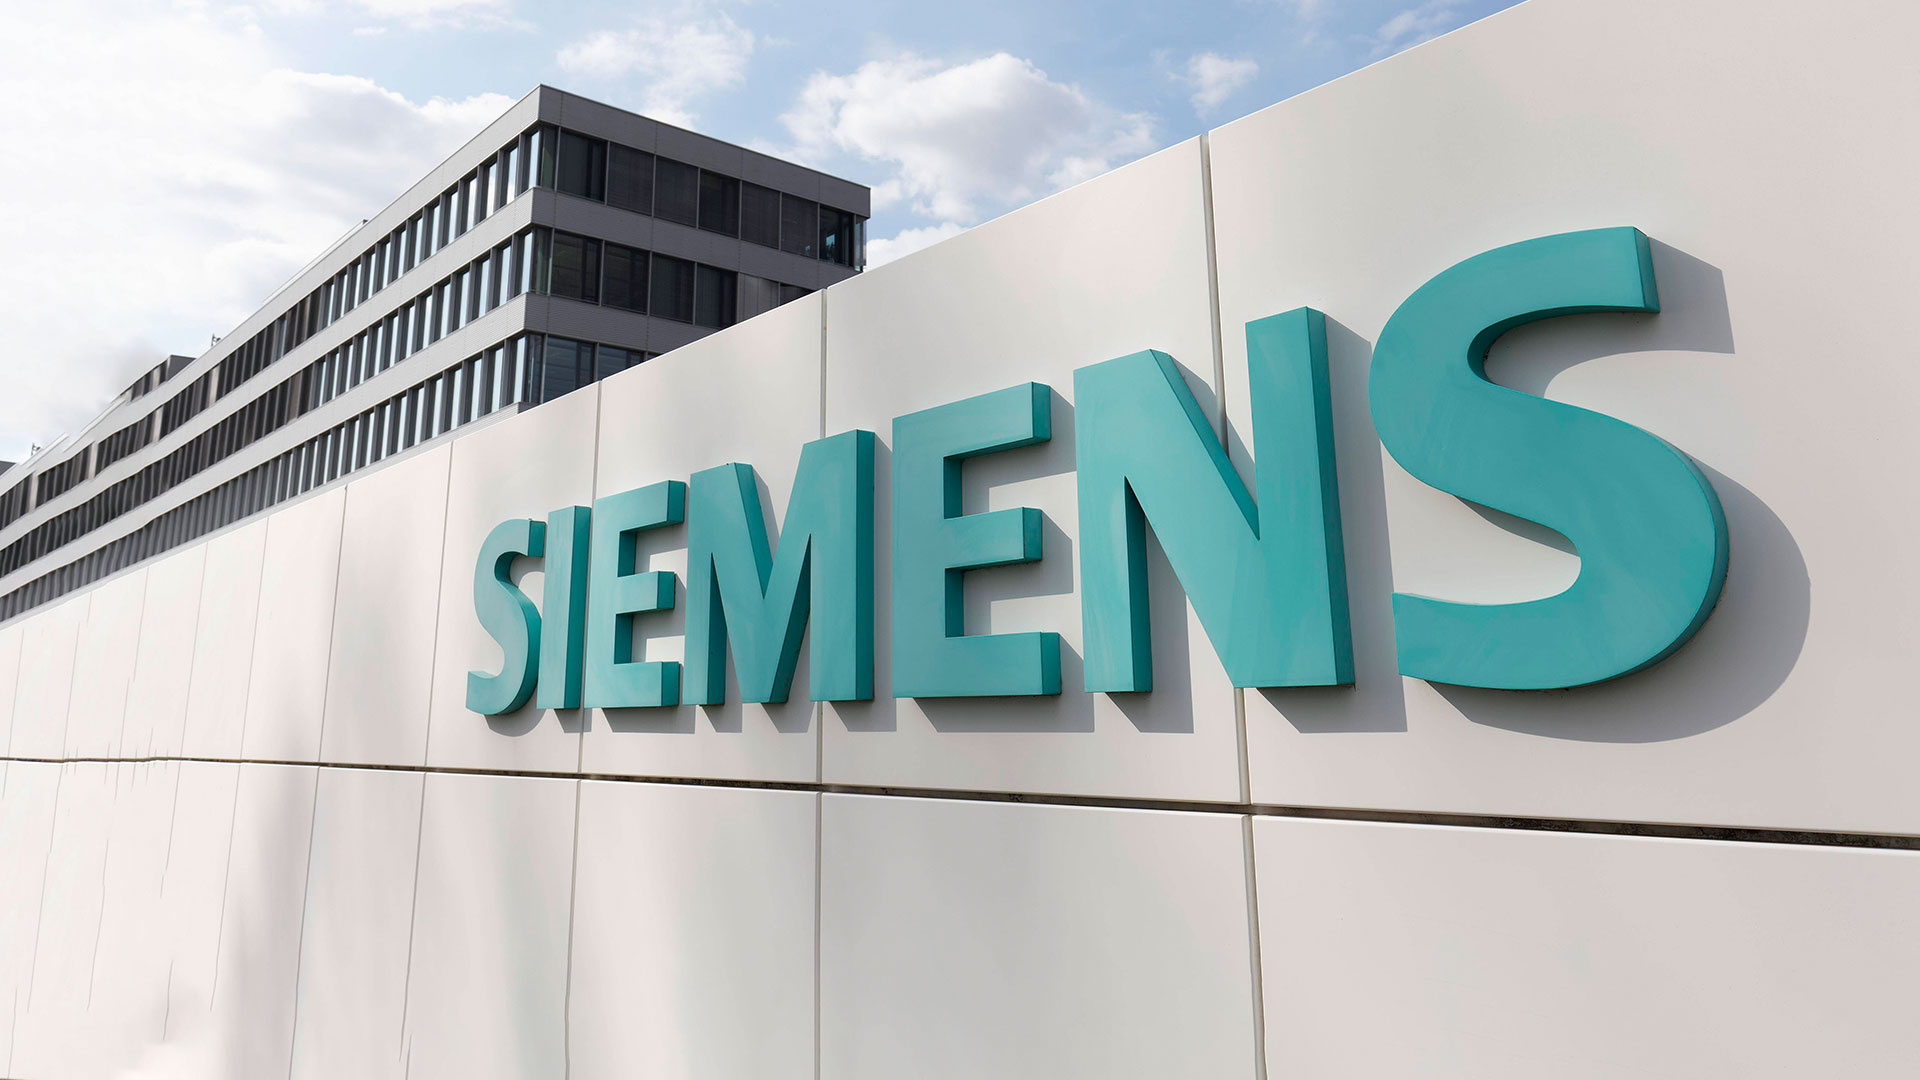 Siemens: A technology company, Electrification, automation and digitalization fields. 1920x1080 Full HD Wallpaper.